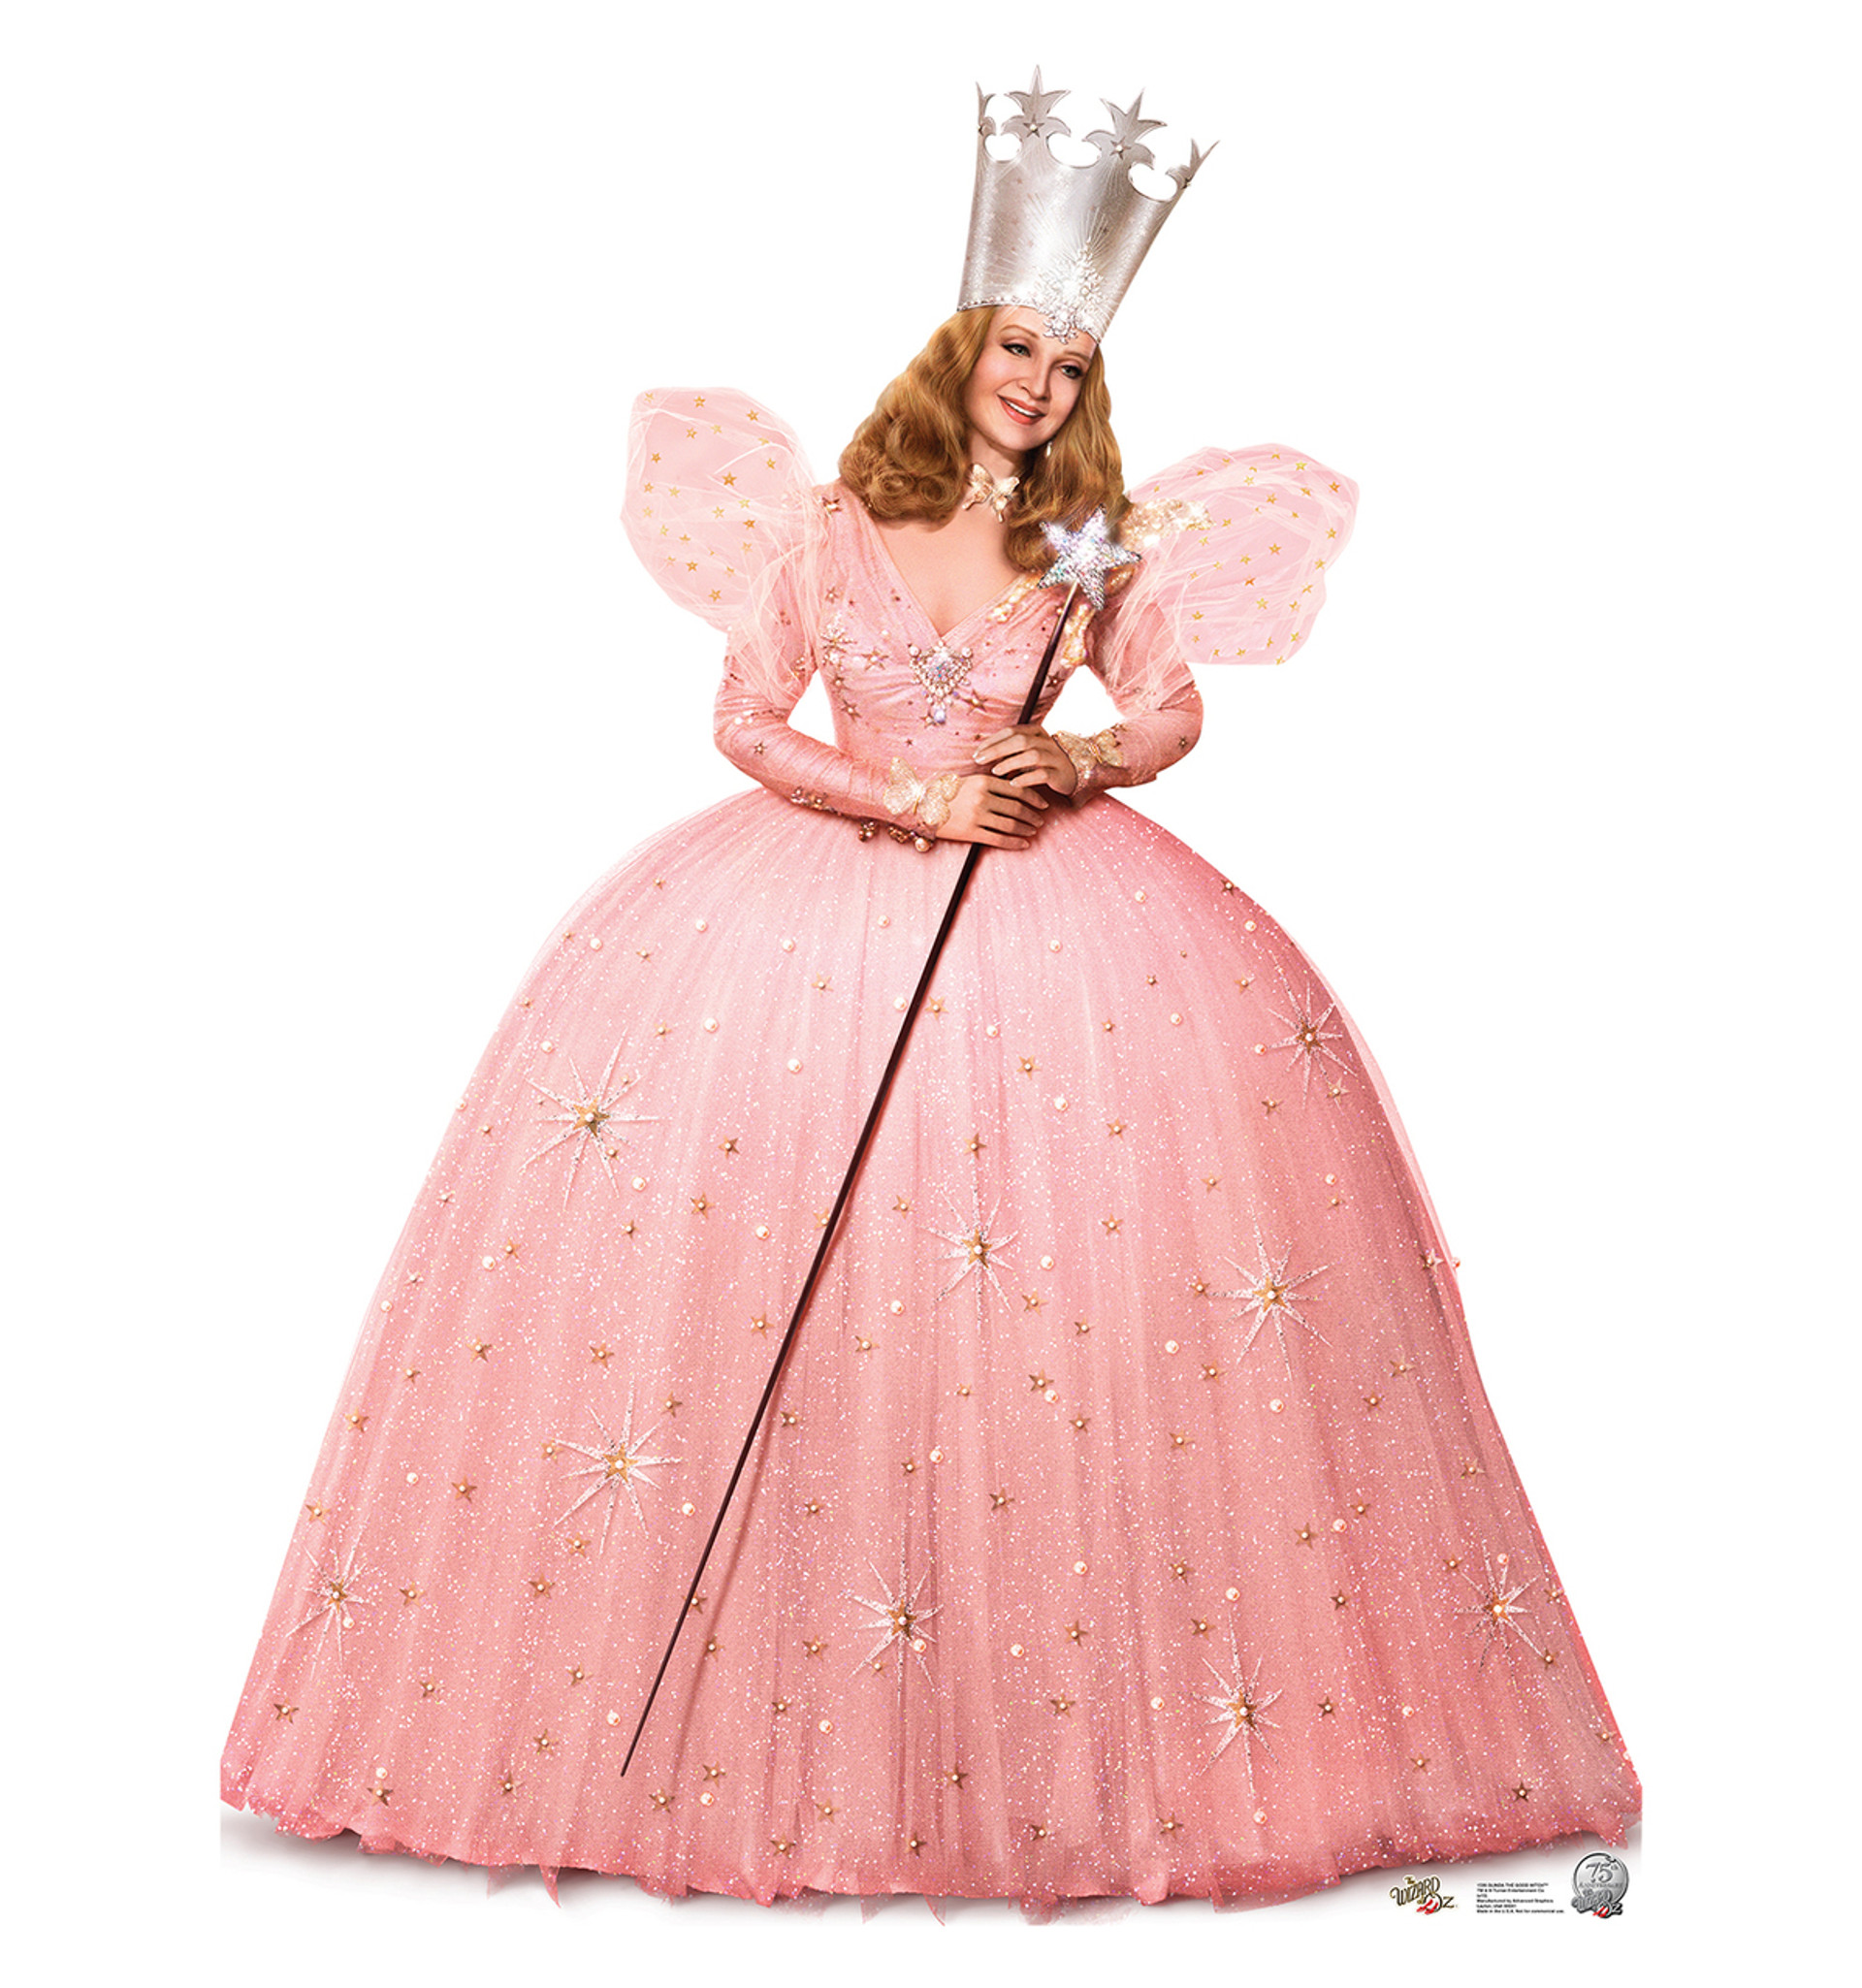 Lifesize Glinda the Good Witch Wizard of Oz Cardboard Standup